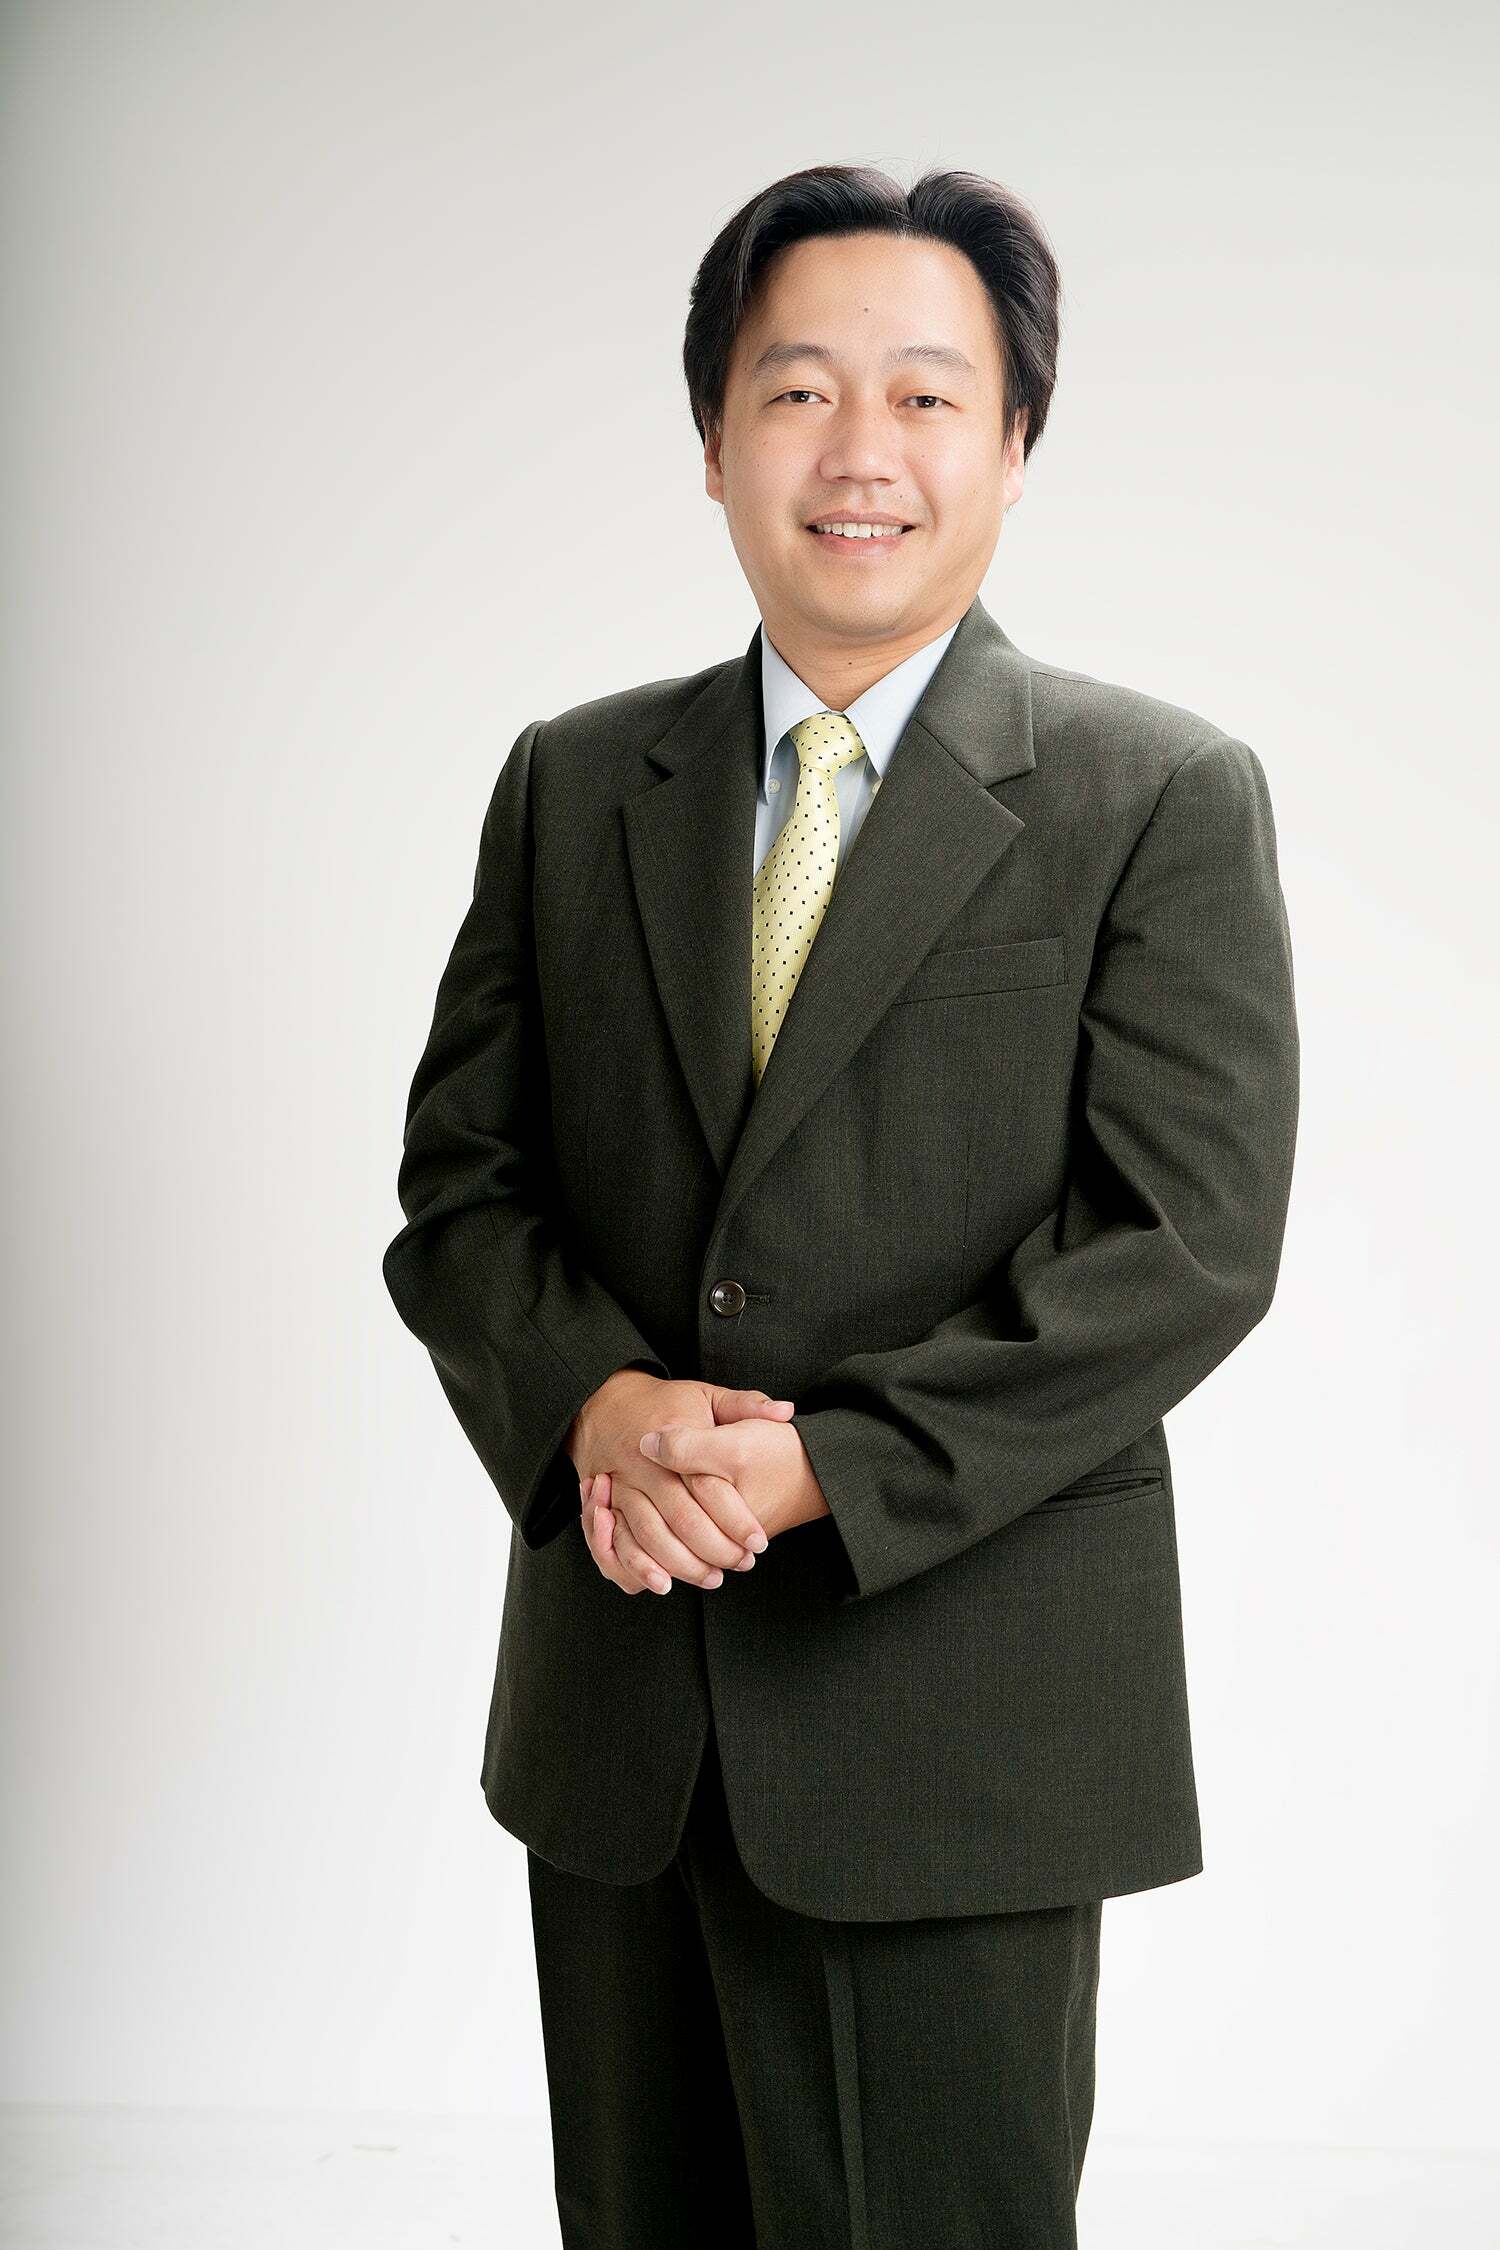 Lawrence Lee, Real Estate Salesperson in San Francisco, Real Estate Alliance